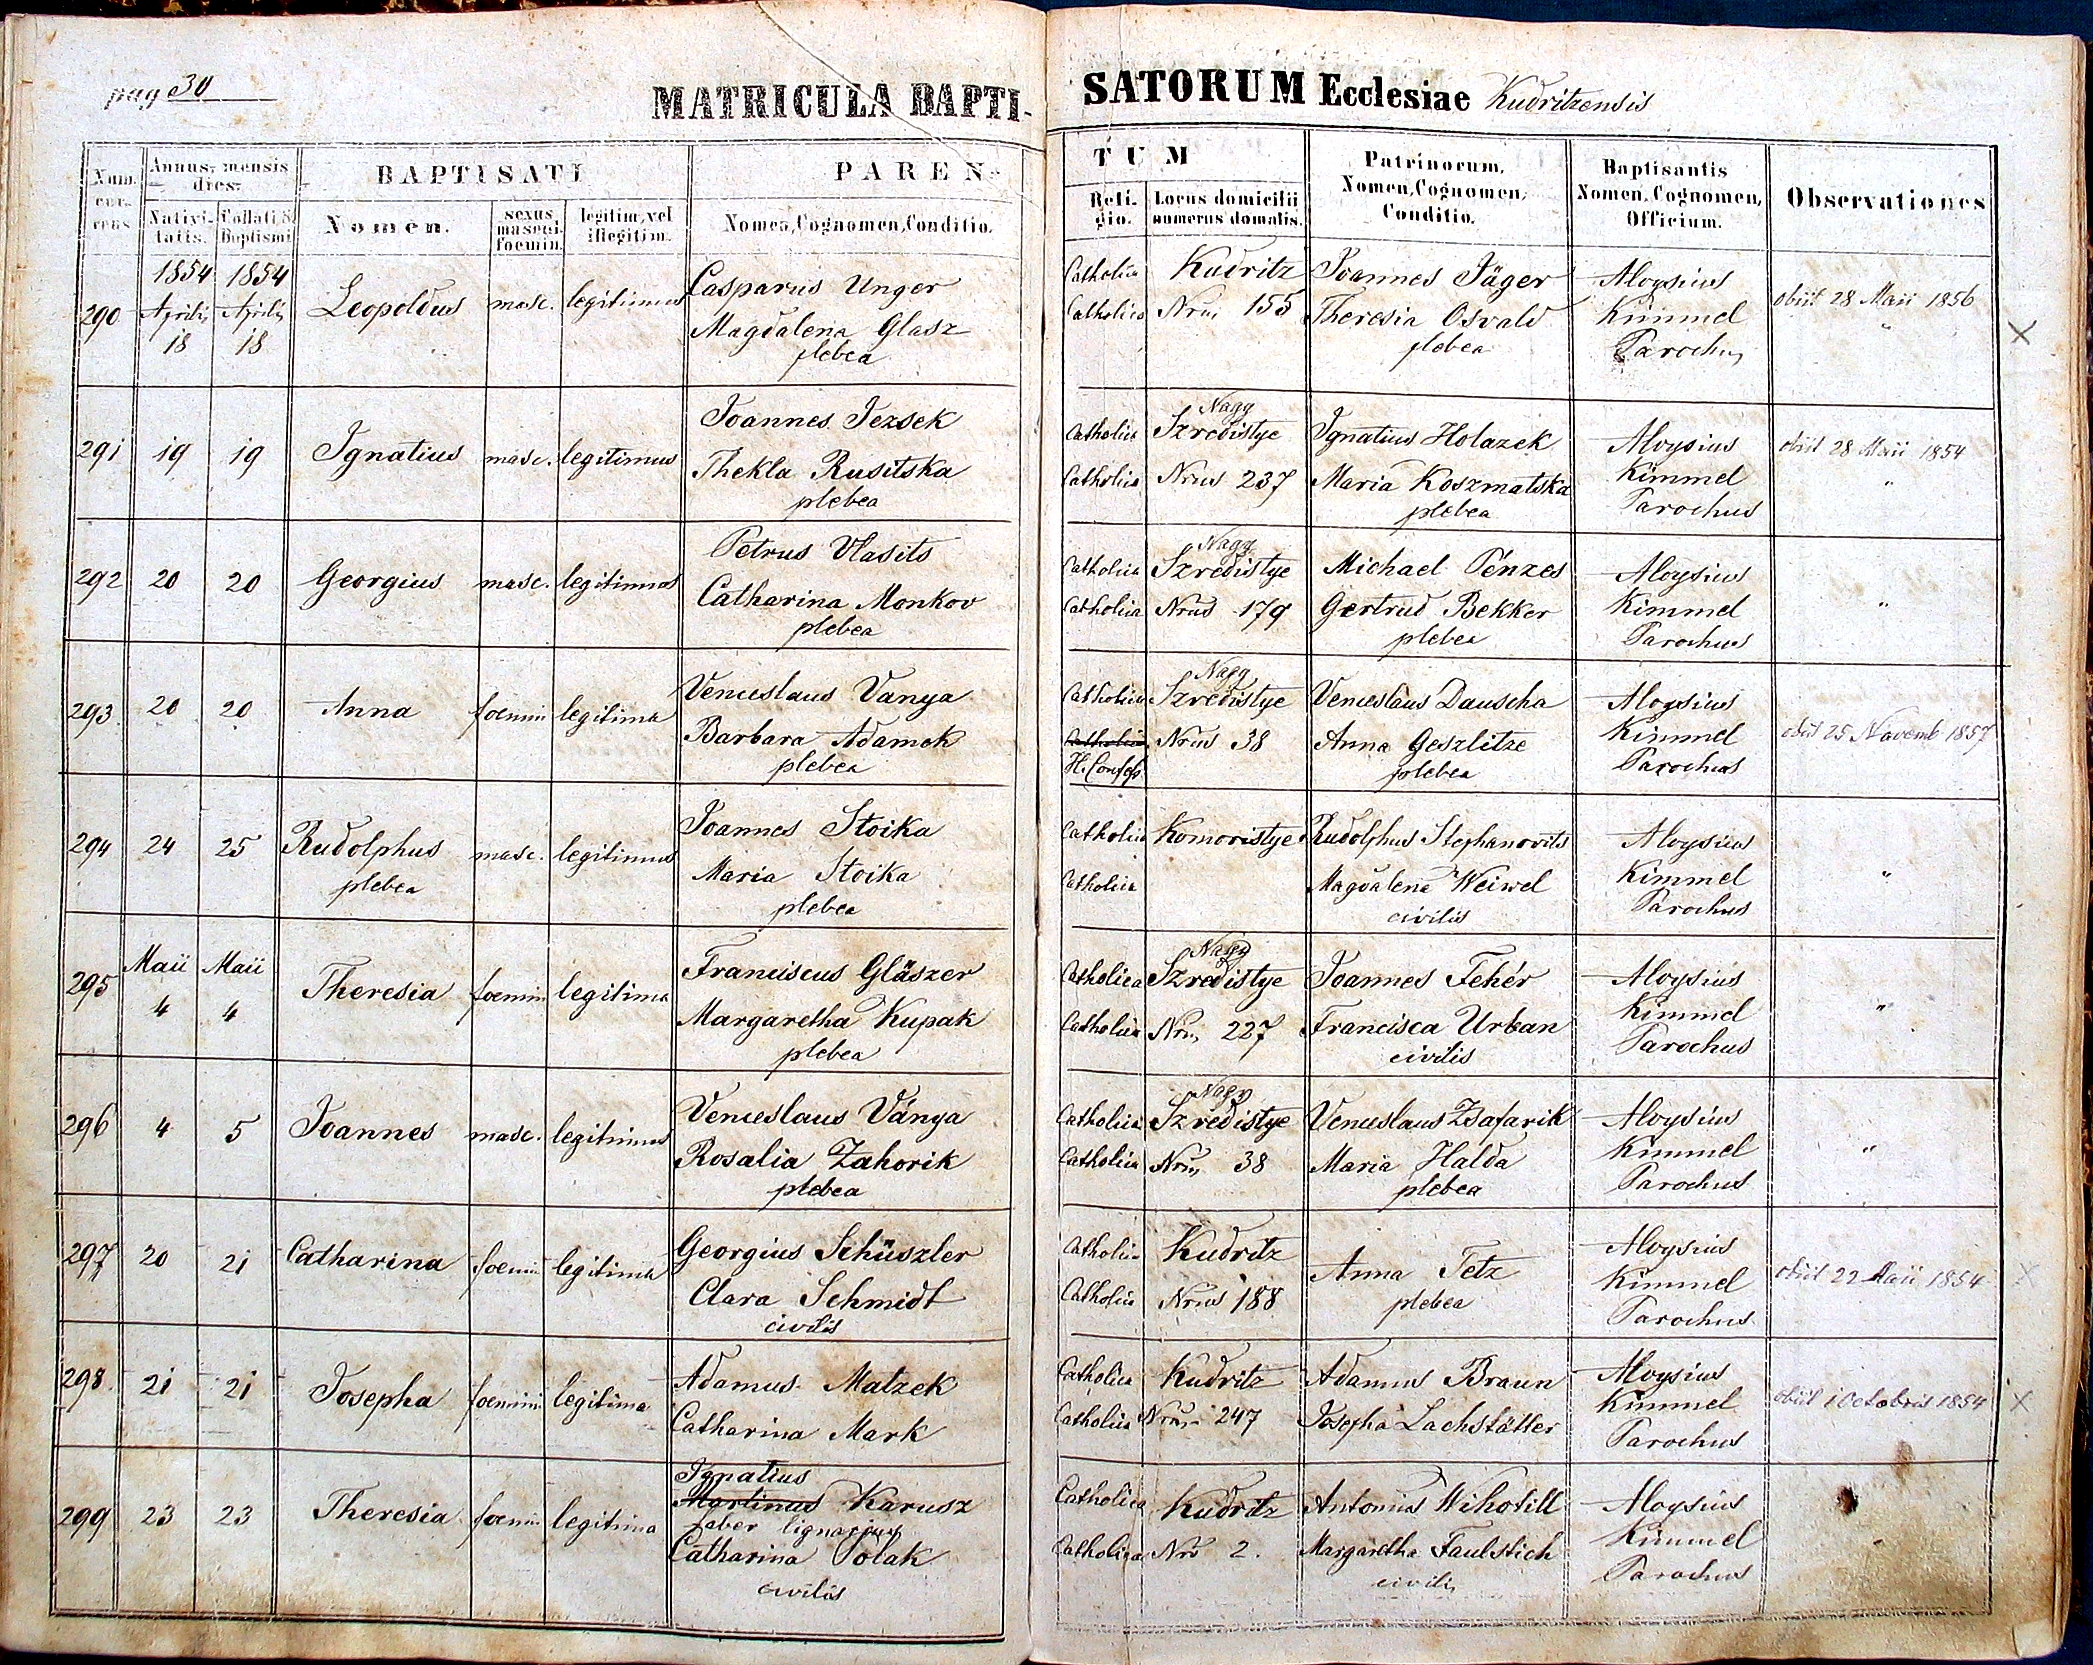 images/church_records/BIRTHS/1852-1870B/030